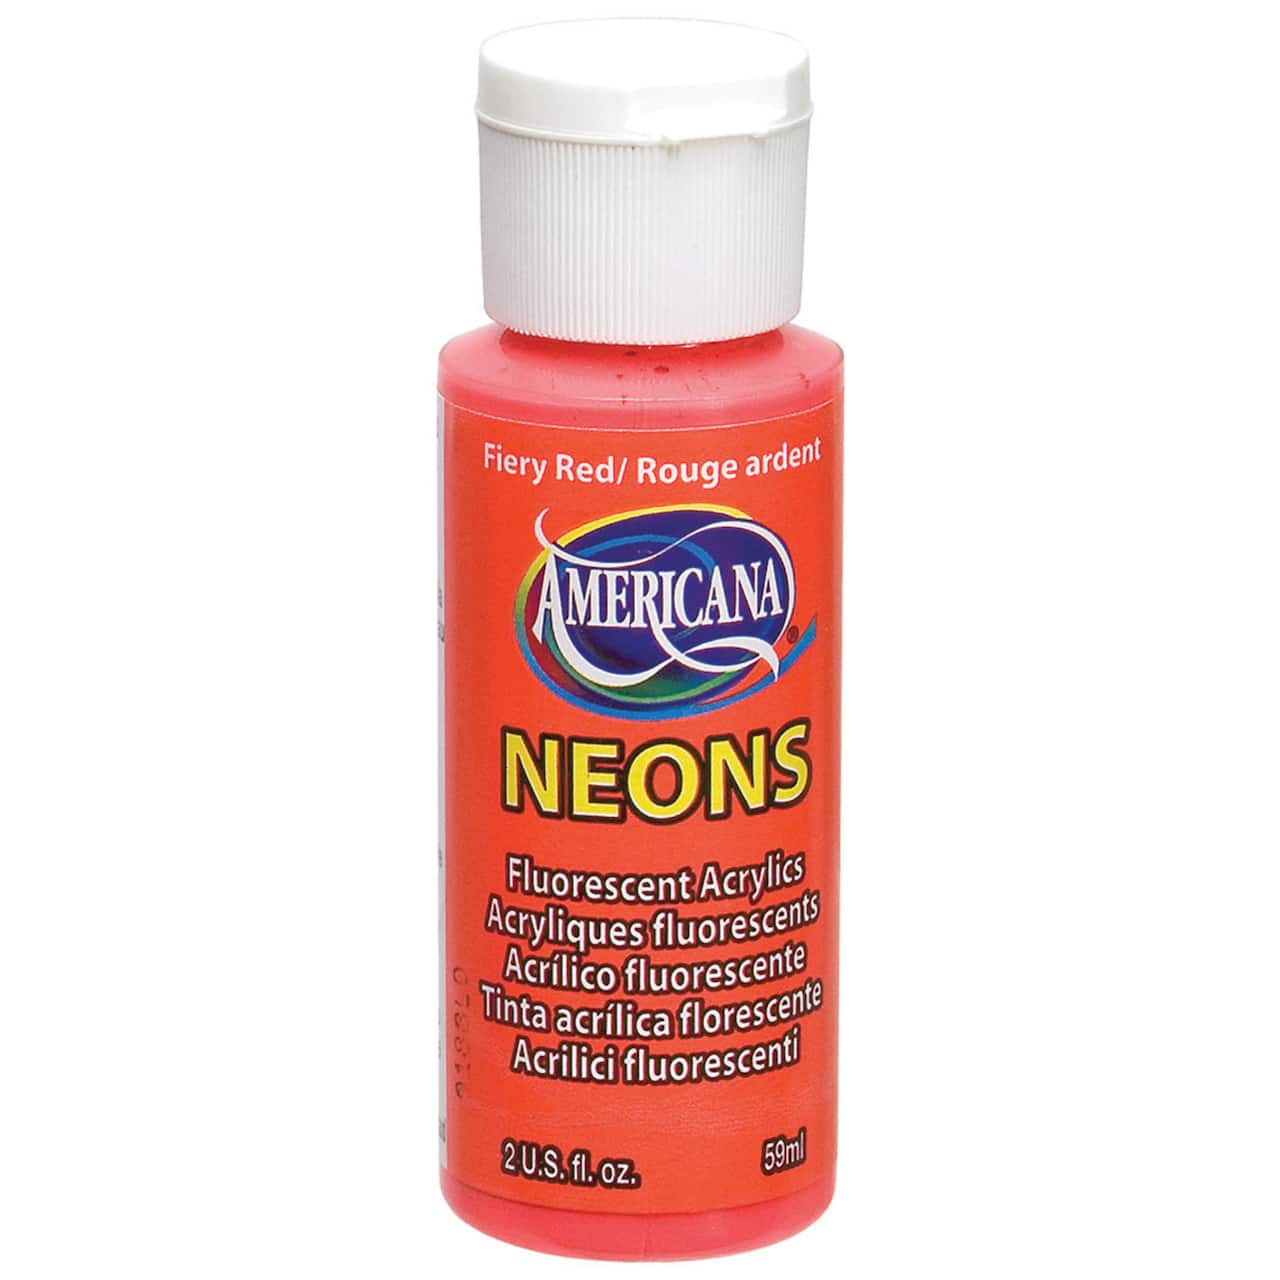 Americana® Neons Fluorescent Acrylic Paint, 2oz.